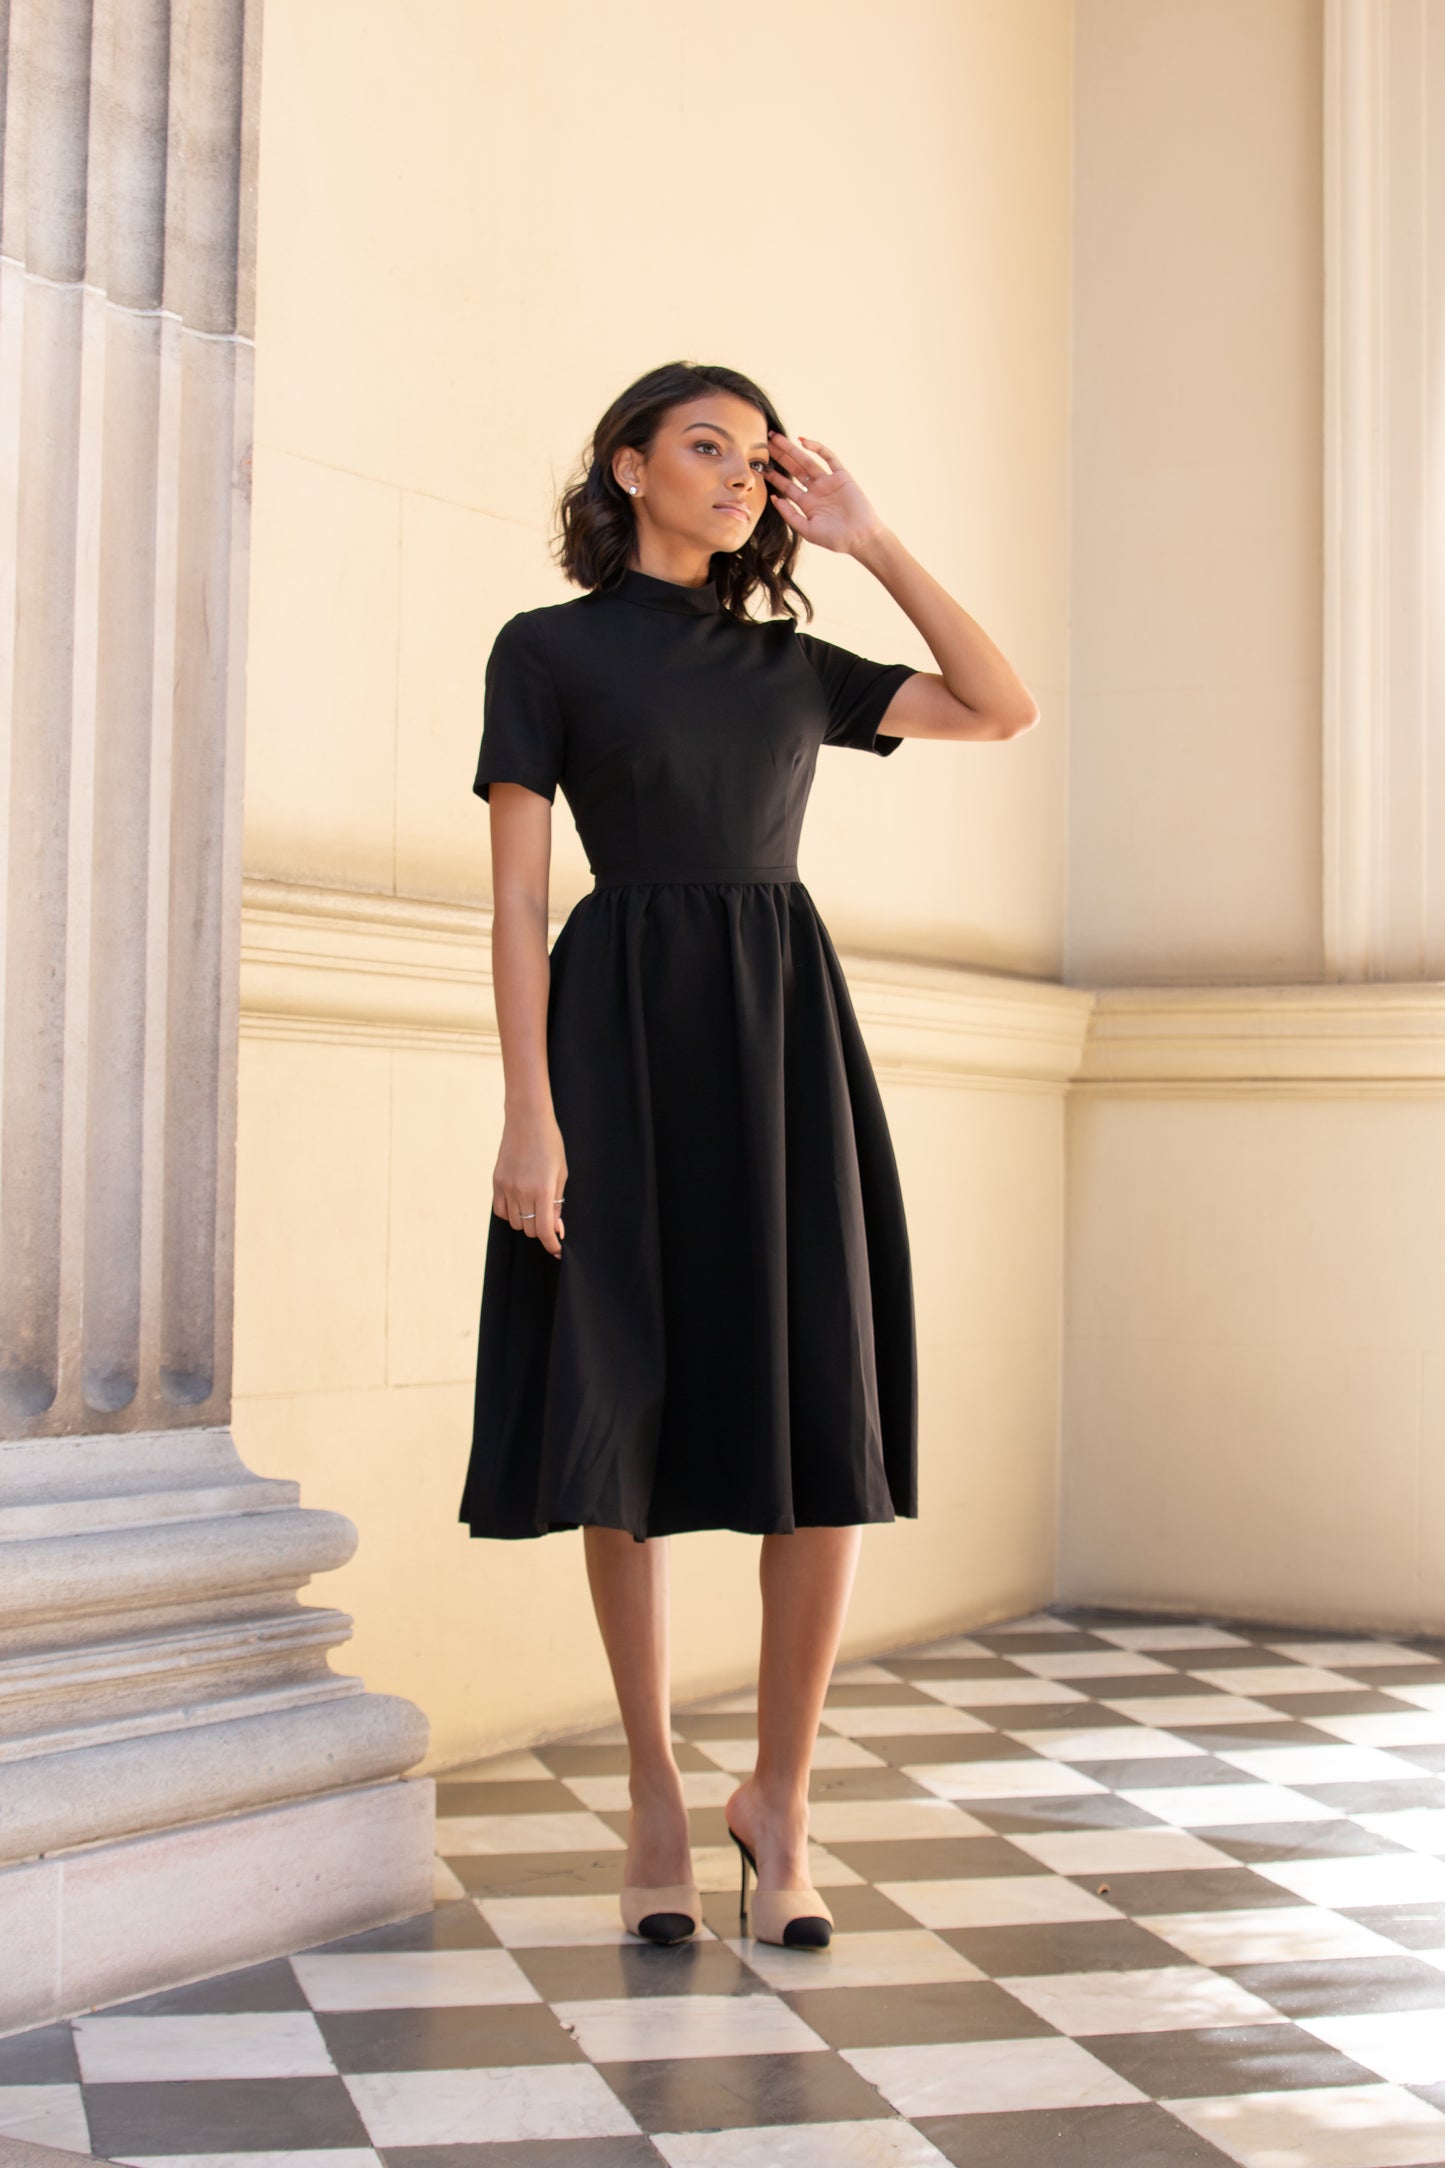 The Savannah Dress - Women's Fit and Flare Work Midi Black Dress